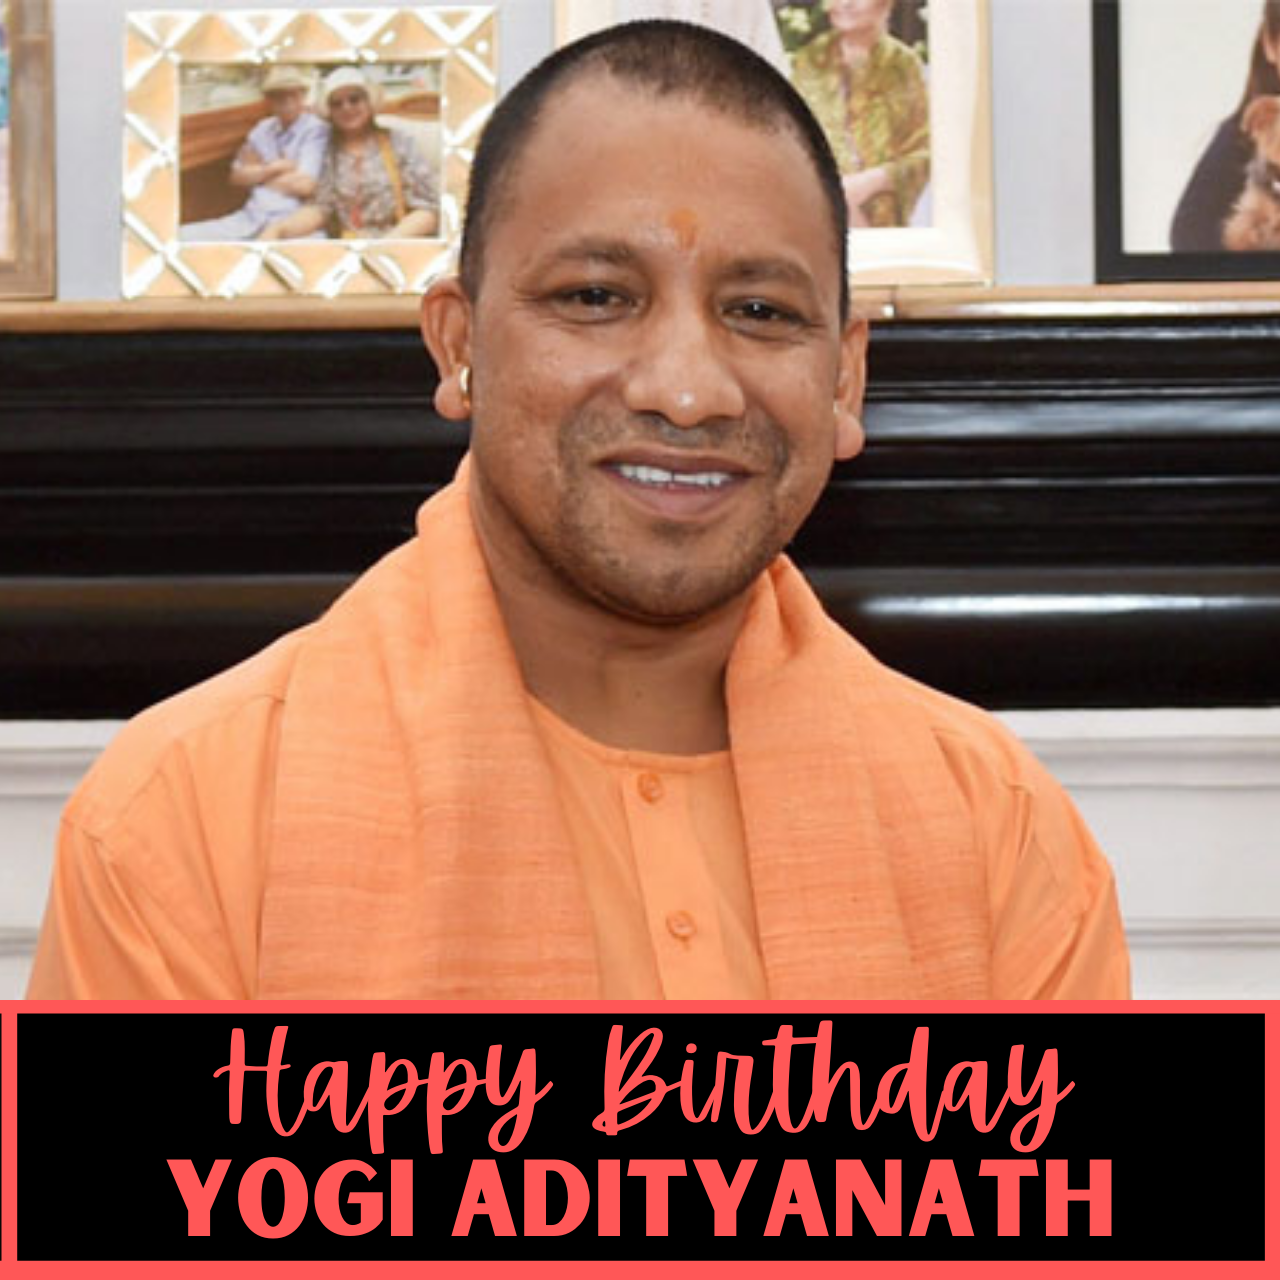 Happy Birthday Yogi Adityanath: Images, Wishes, Photo, and Poster to greet UP CM